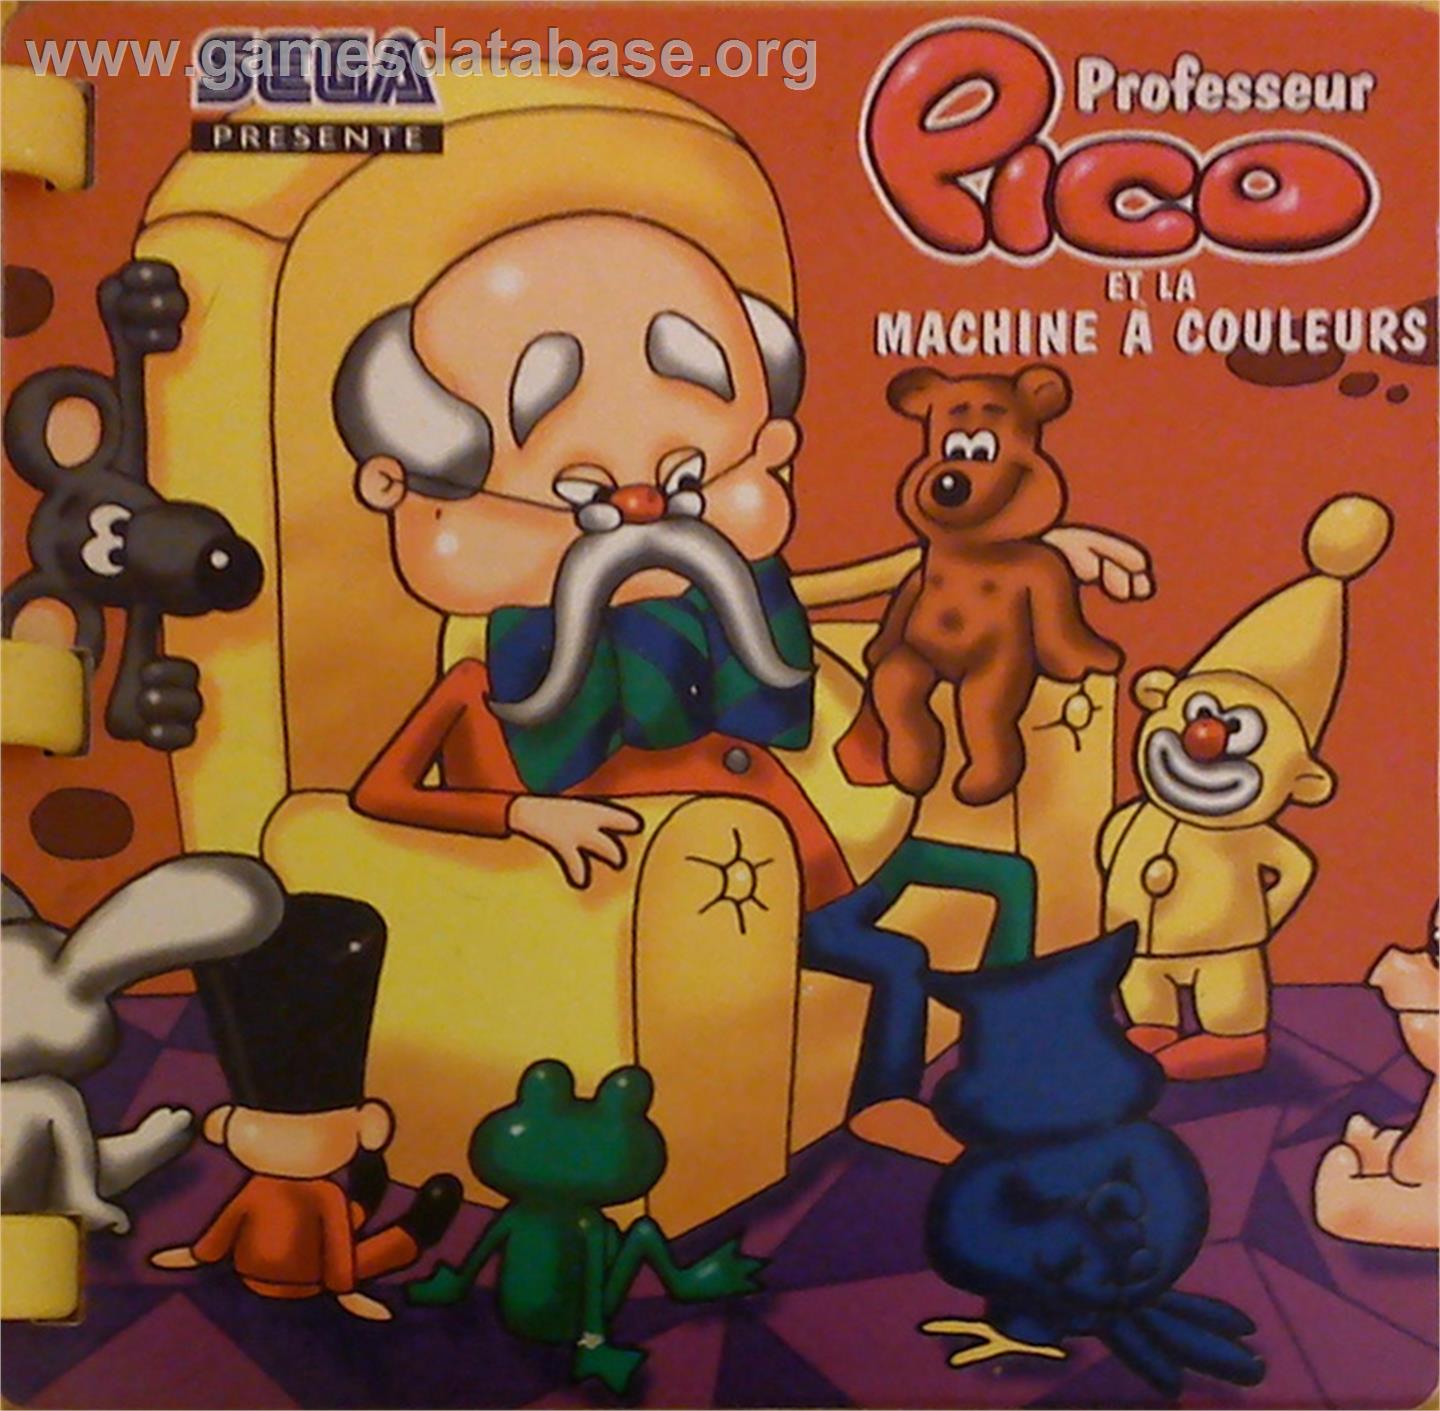 Professor Pico und das Malkasten Puzzle - Sega Pico - Artwork - Box